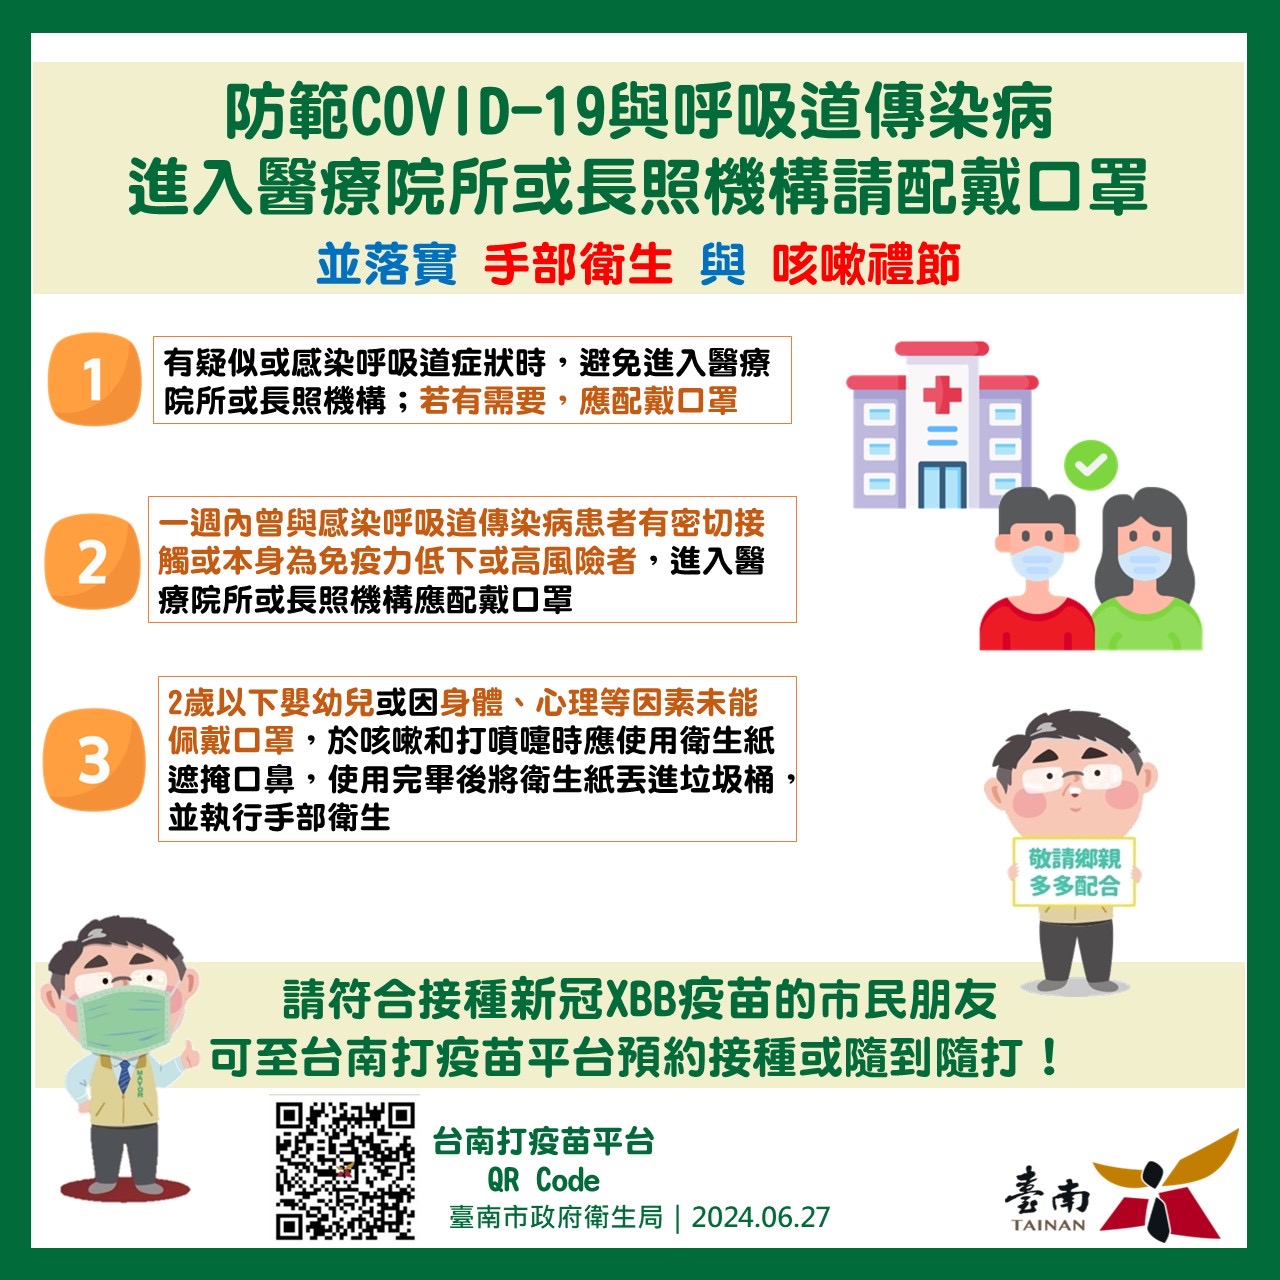 COVID-19疫情卷土重来，台南市卫生局呼吁民众赶快打疫苗。传出部分里办公处在宣导时称「武汉肺炎」又侵袭，市府卫生局表示官方宣导早已统一称为COVID-19。记者周宗祯／翻摄